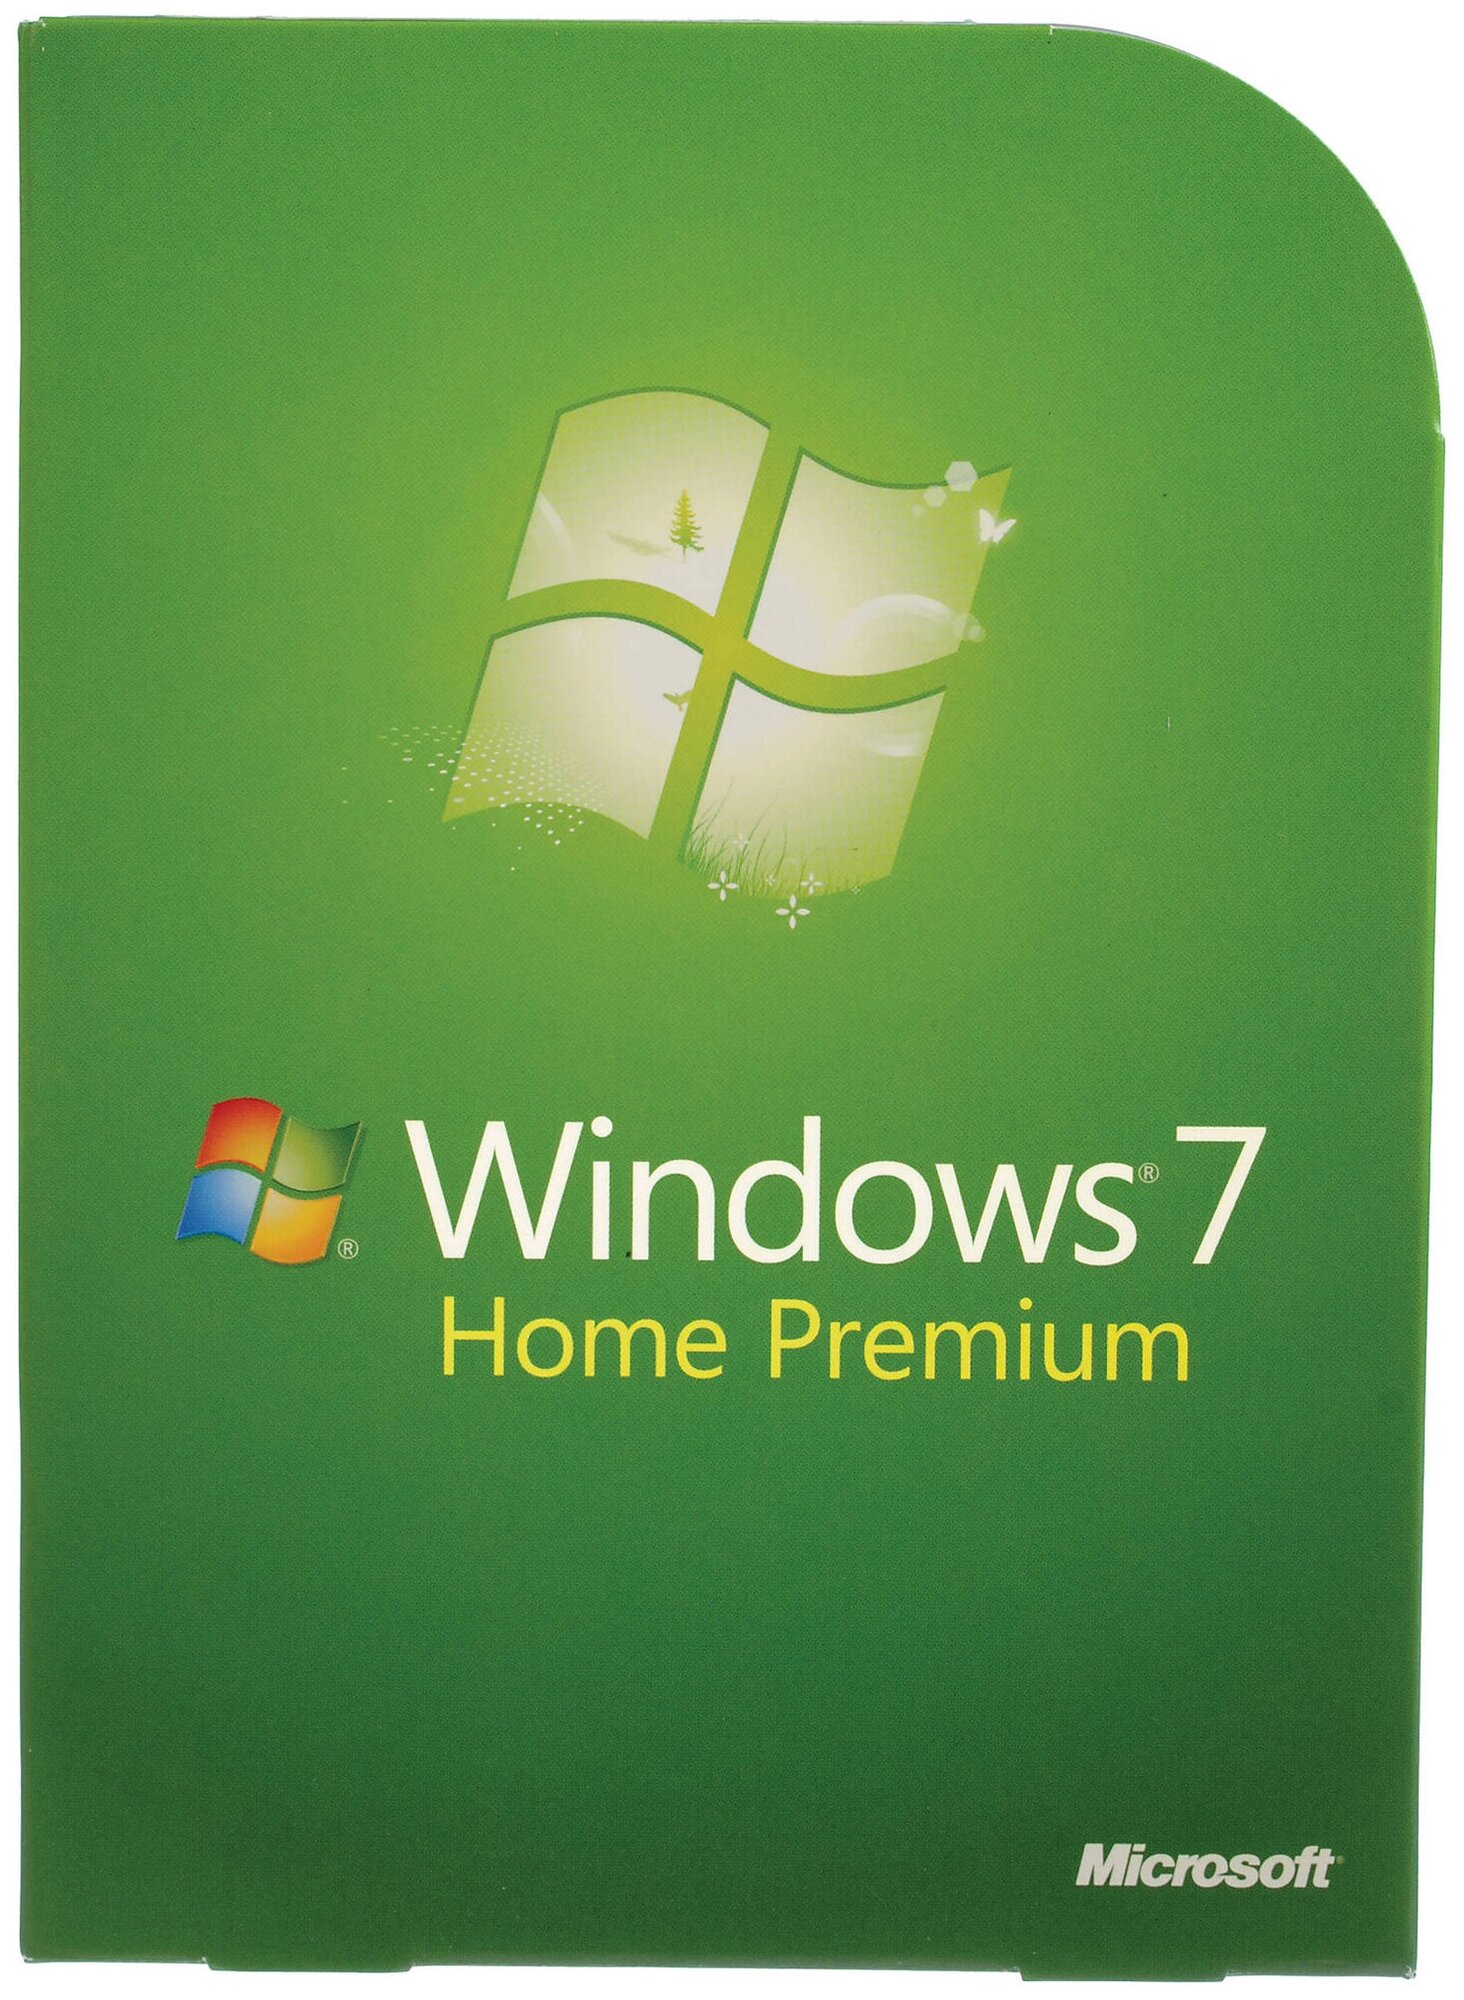 Microsoft Windows 7 Домашняя расширенная